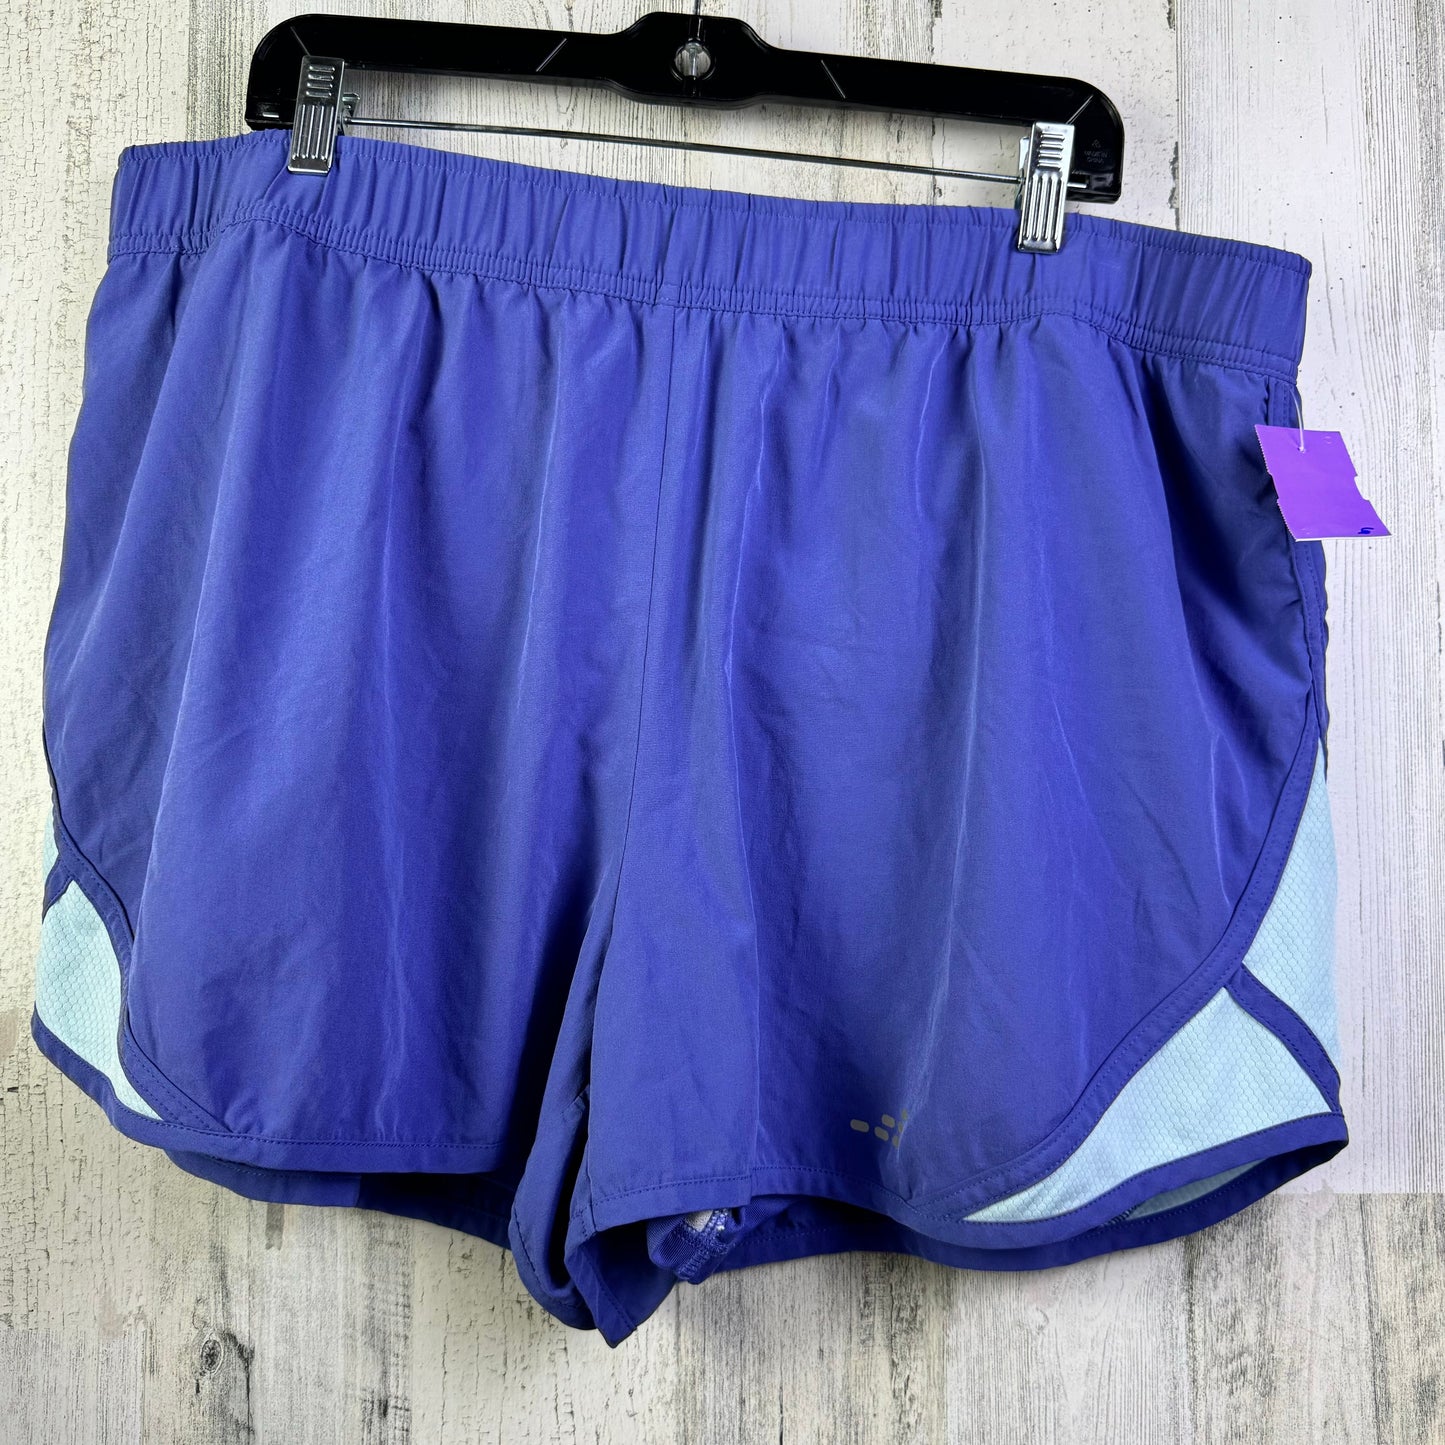 Blue Athletic Shorts Bcg, Size 1x